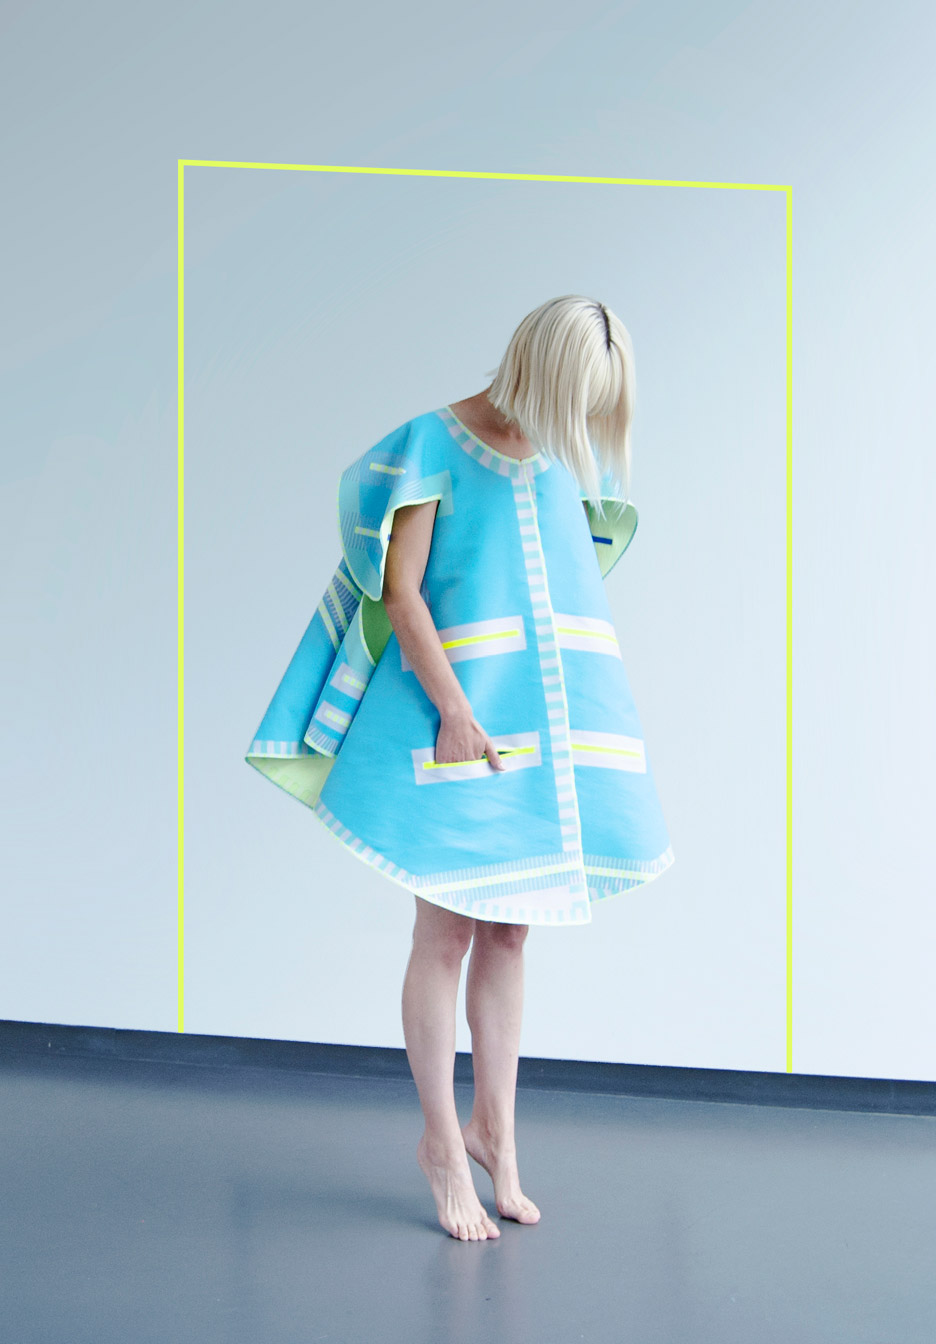 Vera de Pont Pop Up fashion collection at Dutch Design Week 2015